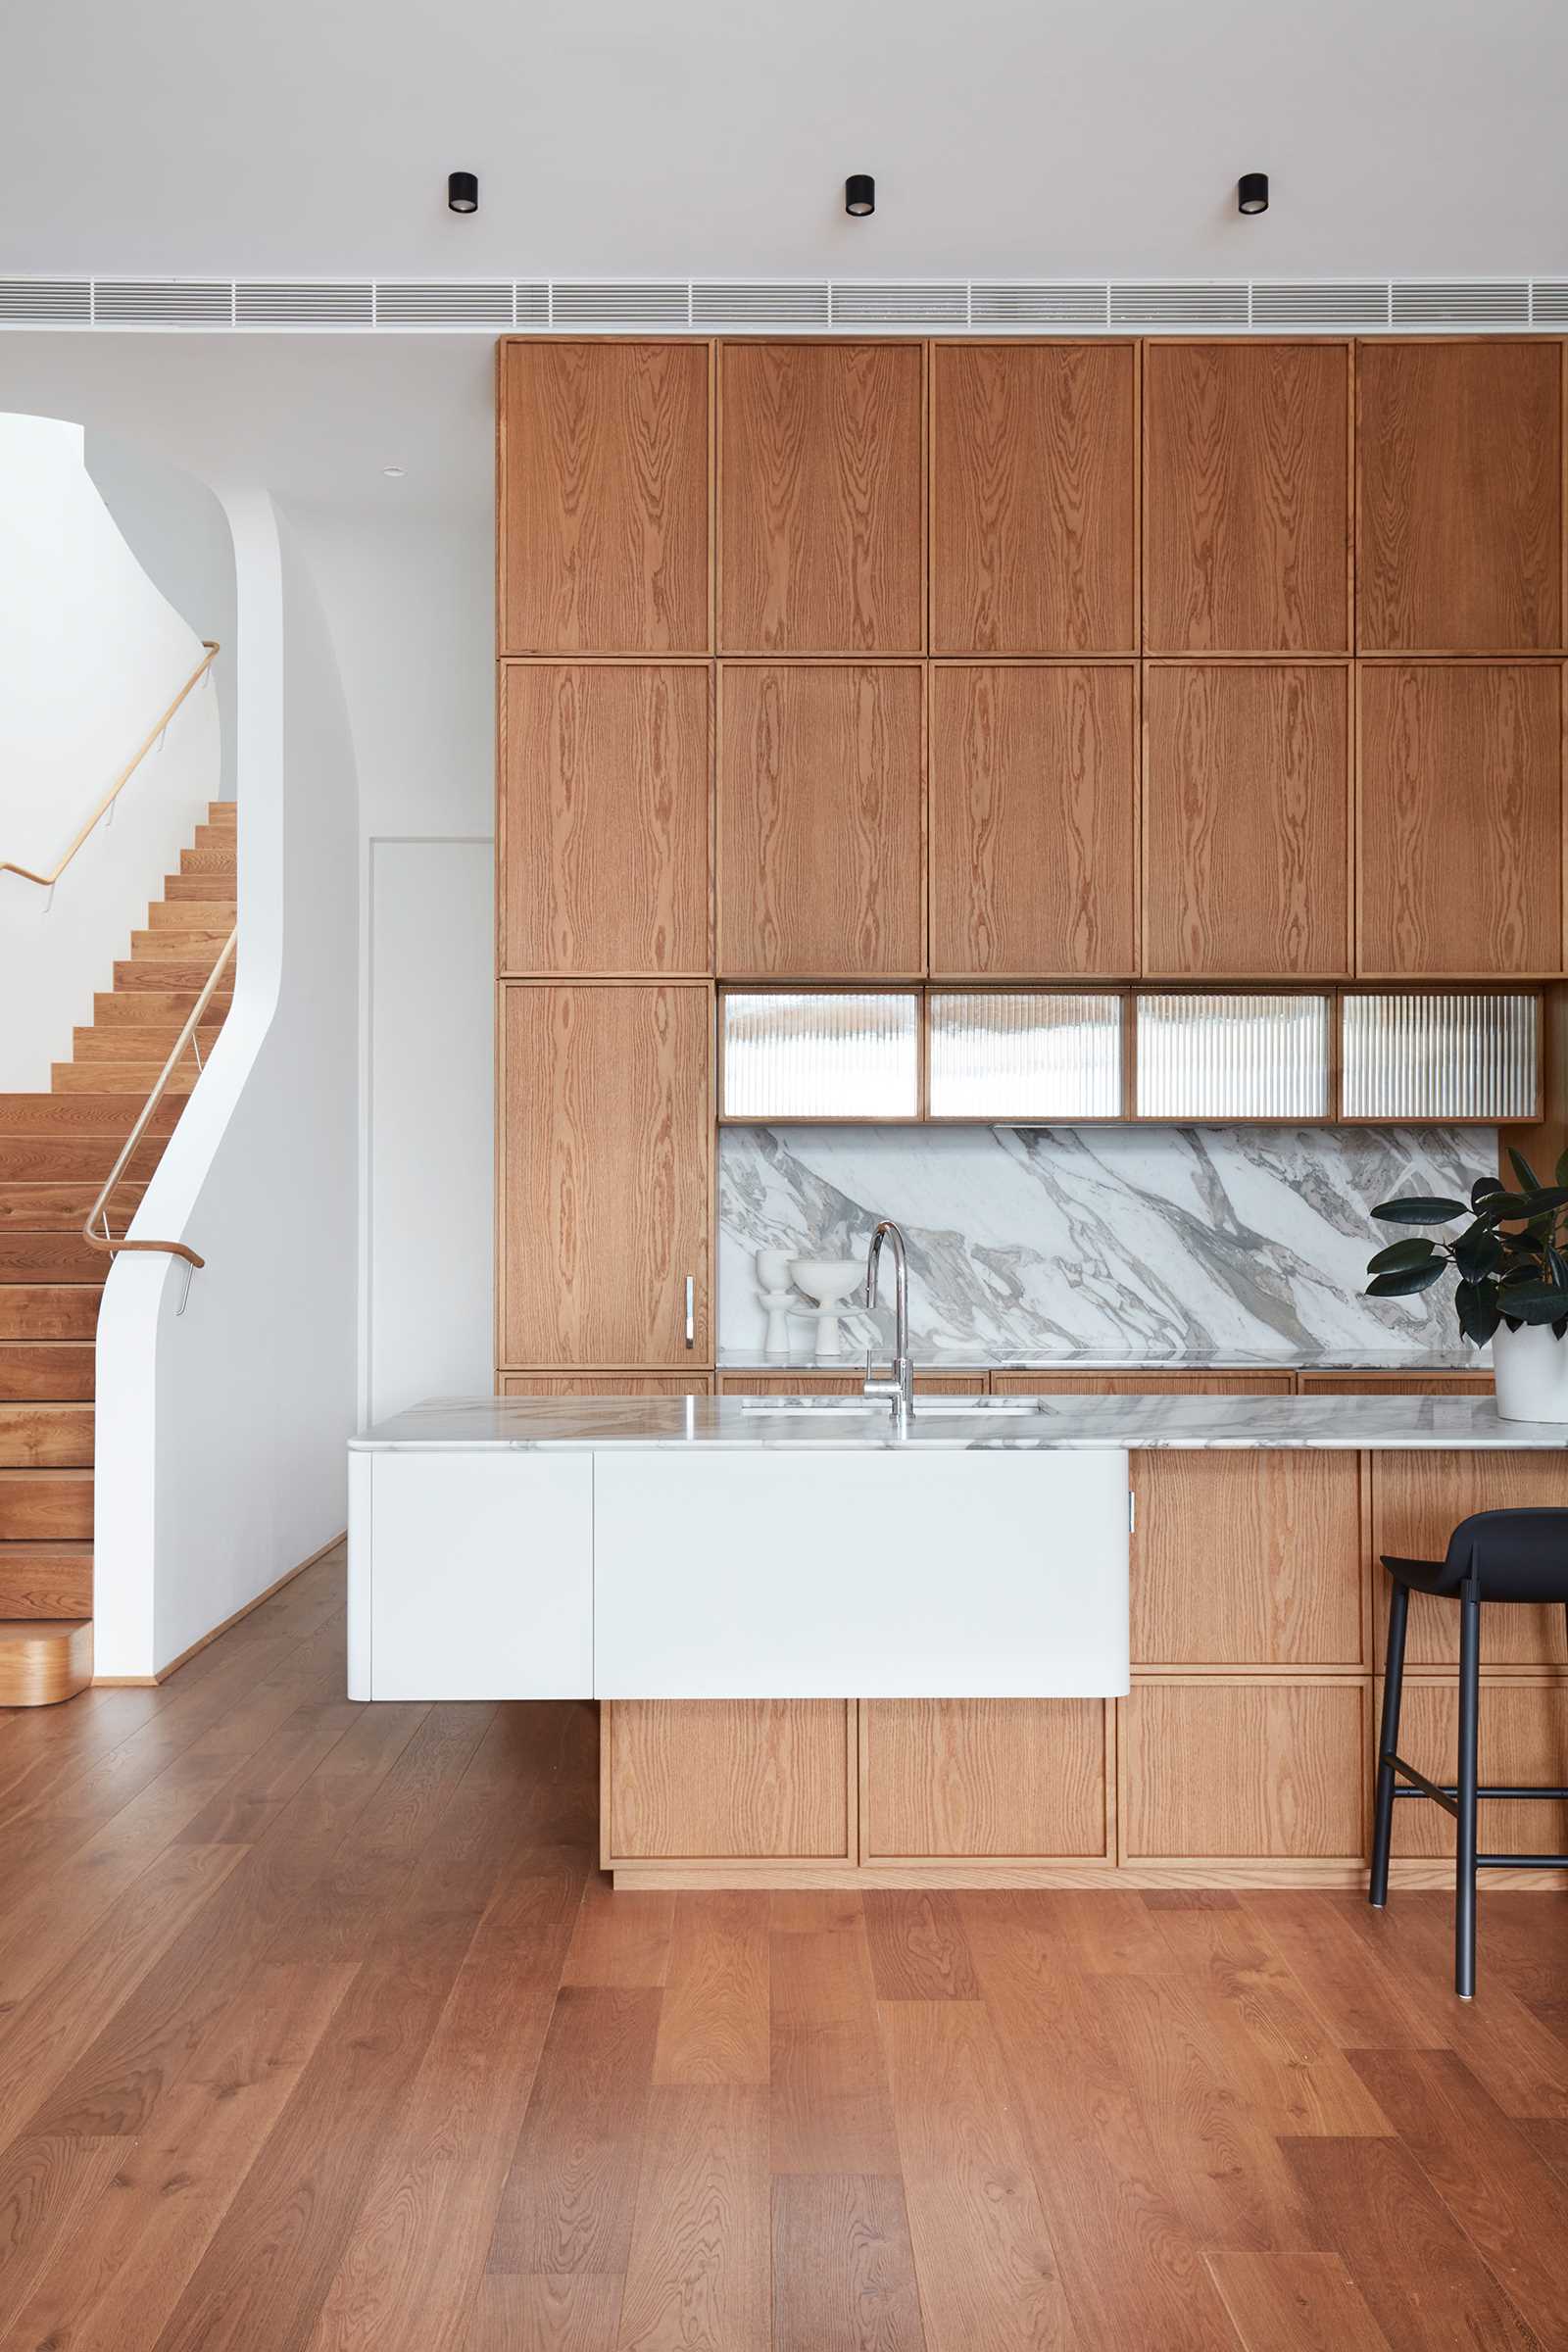 A modern kitchen with wood cabinets and stone backsplash.